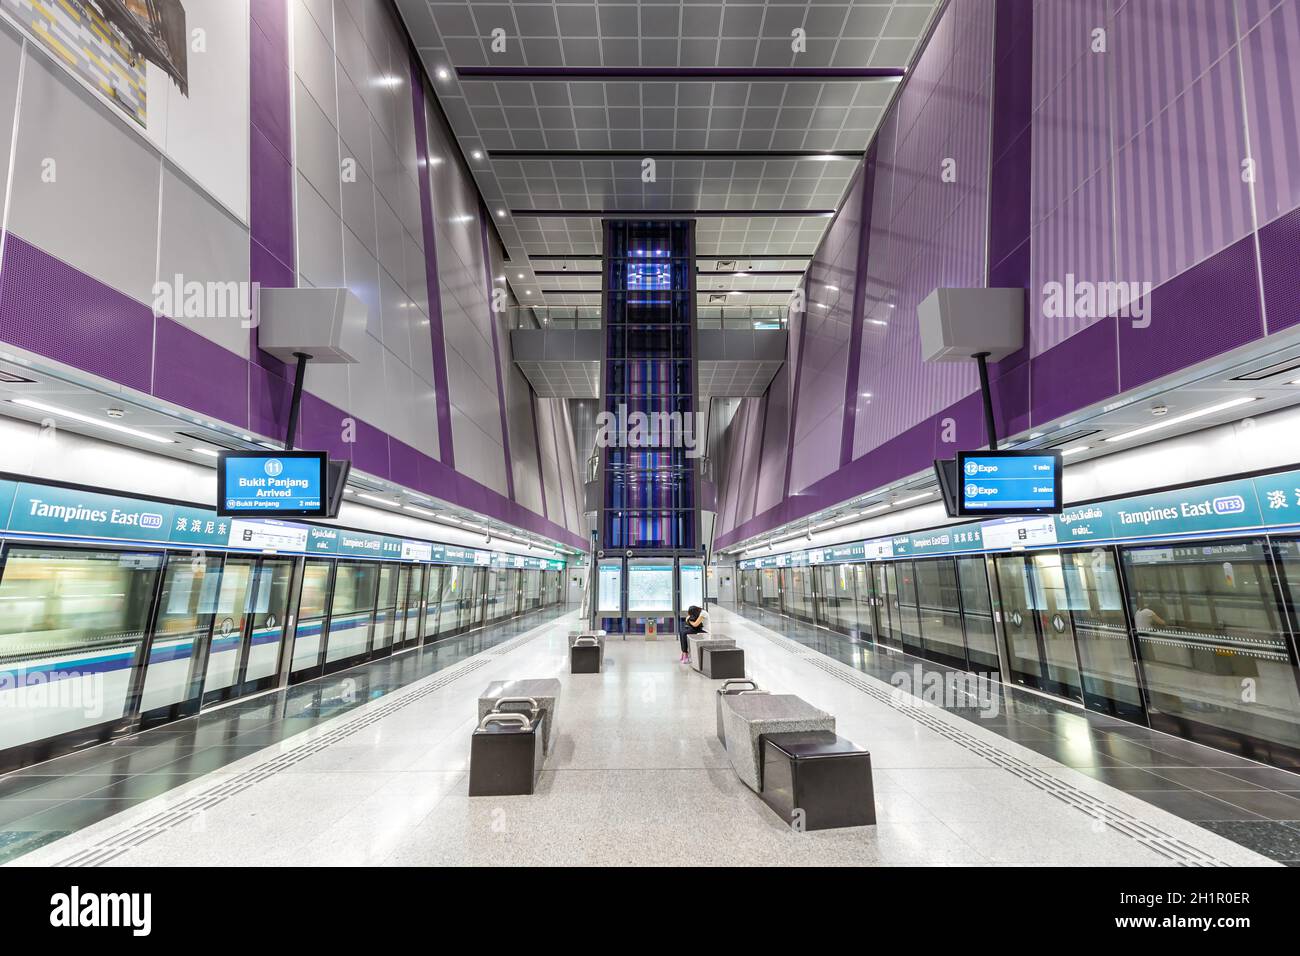 Singapore – January 29, 2018: MRT Metro Tampines East Station in Singapore. Stock Photo